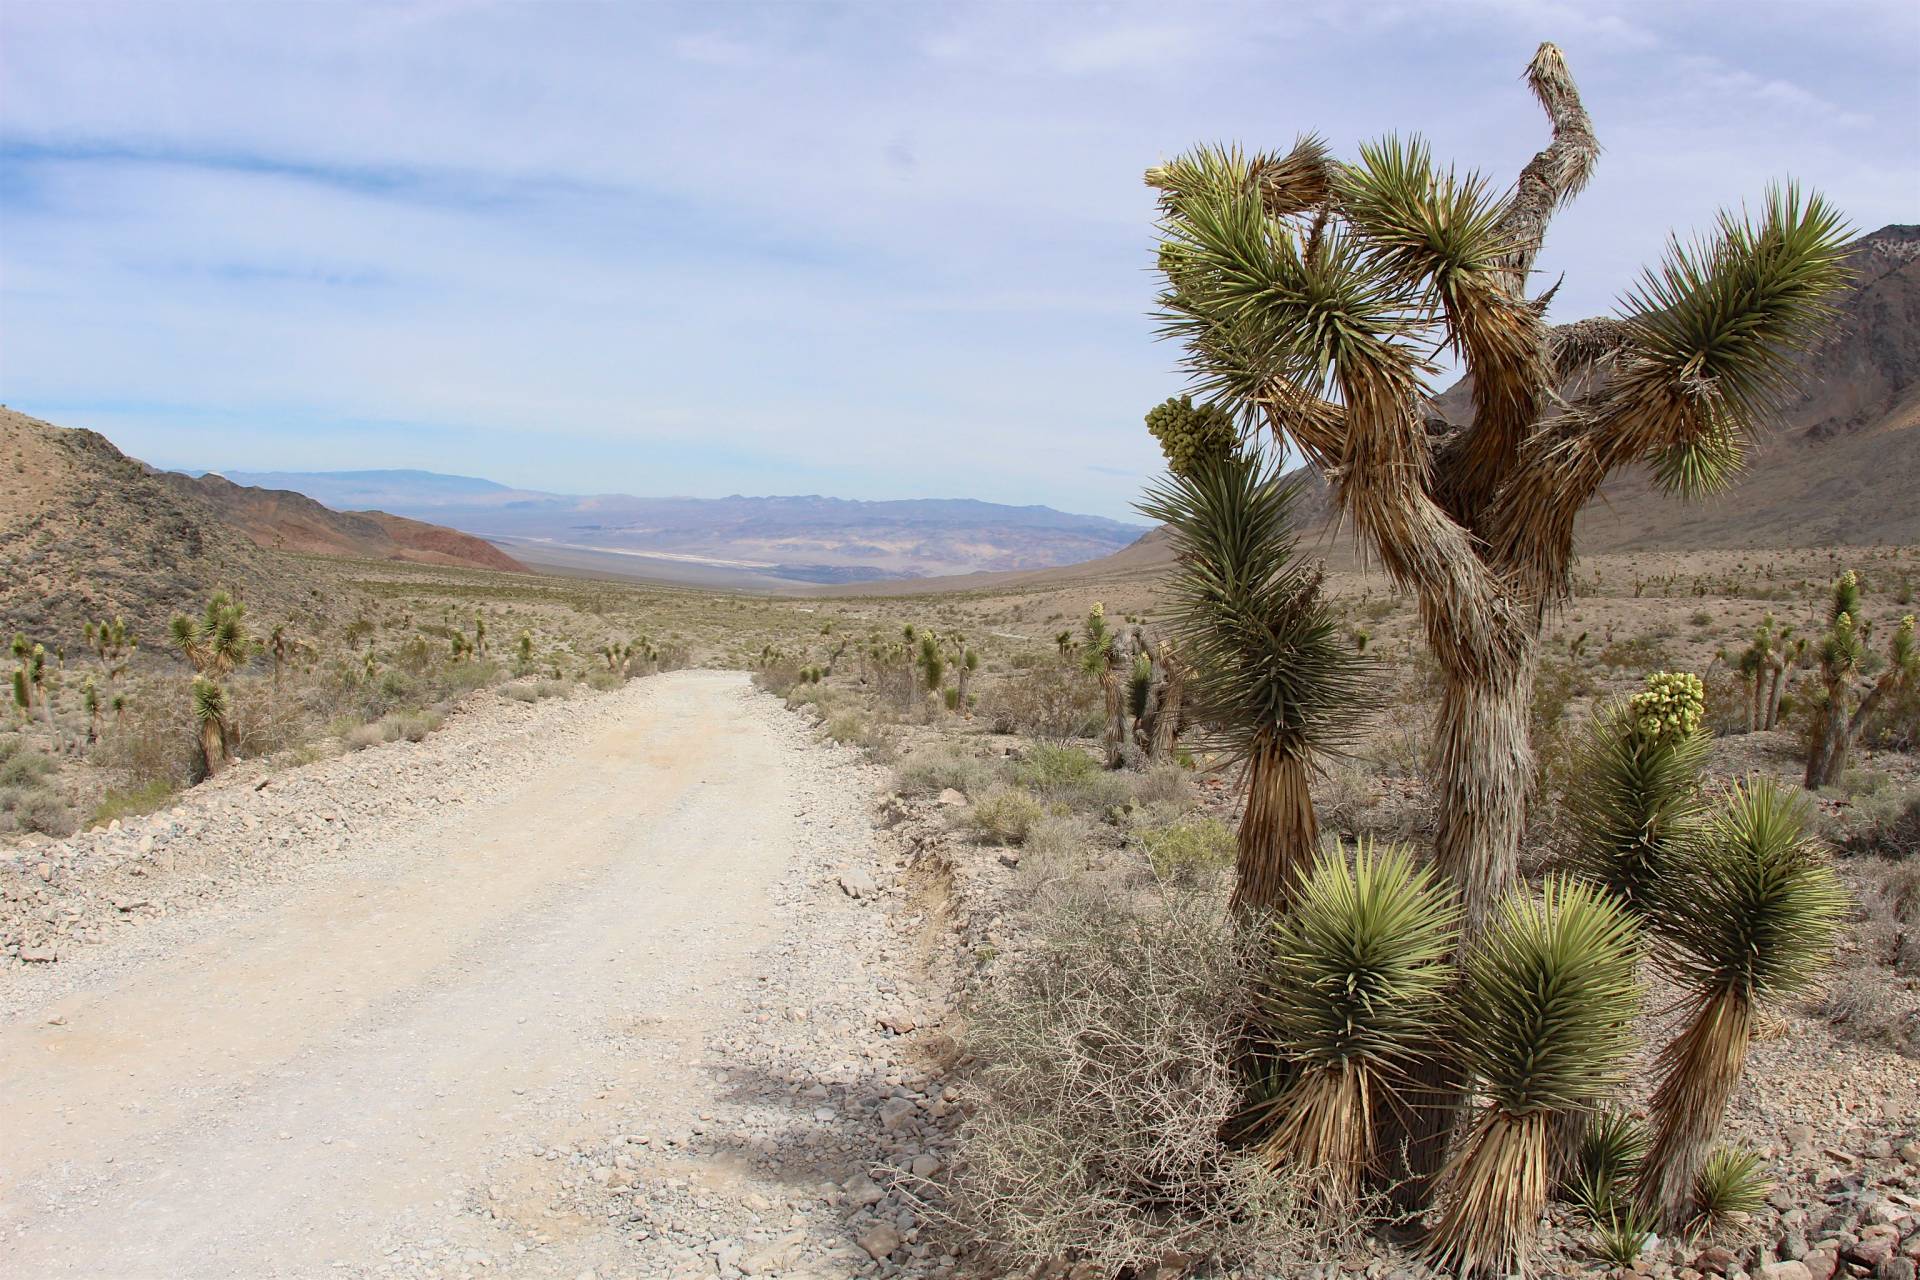 Joshua trees along the Racetrack Road, Death Valley National Park, California